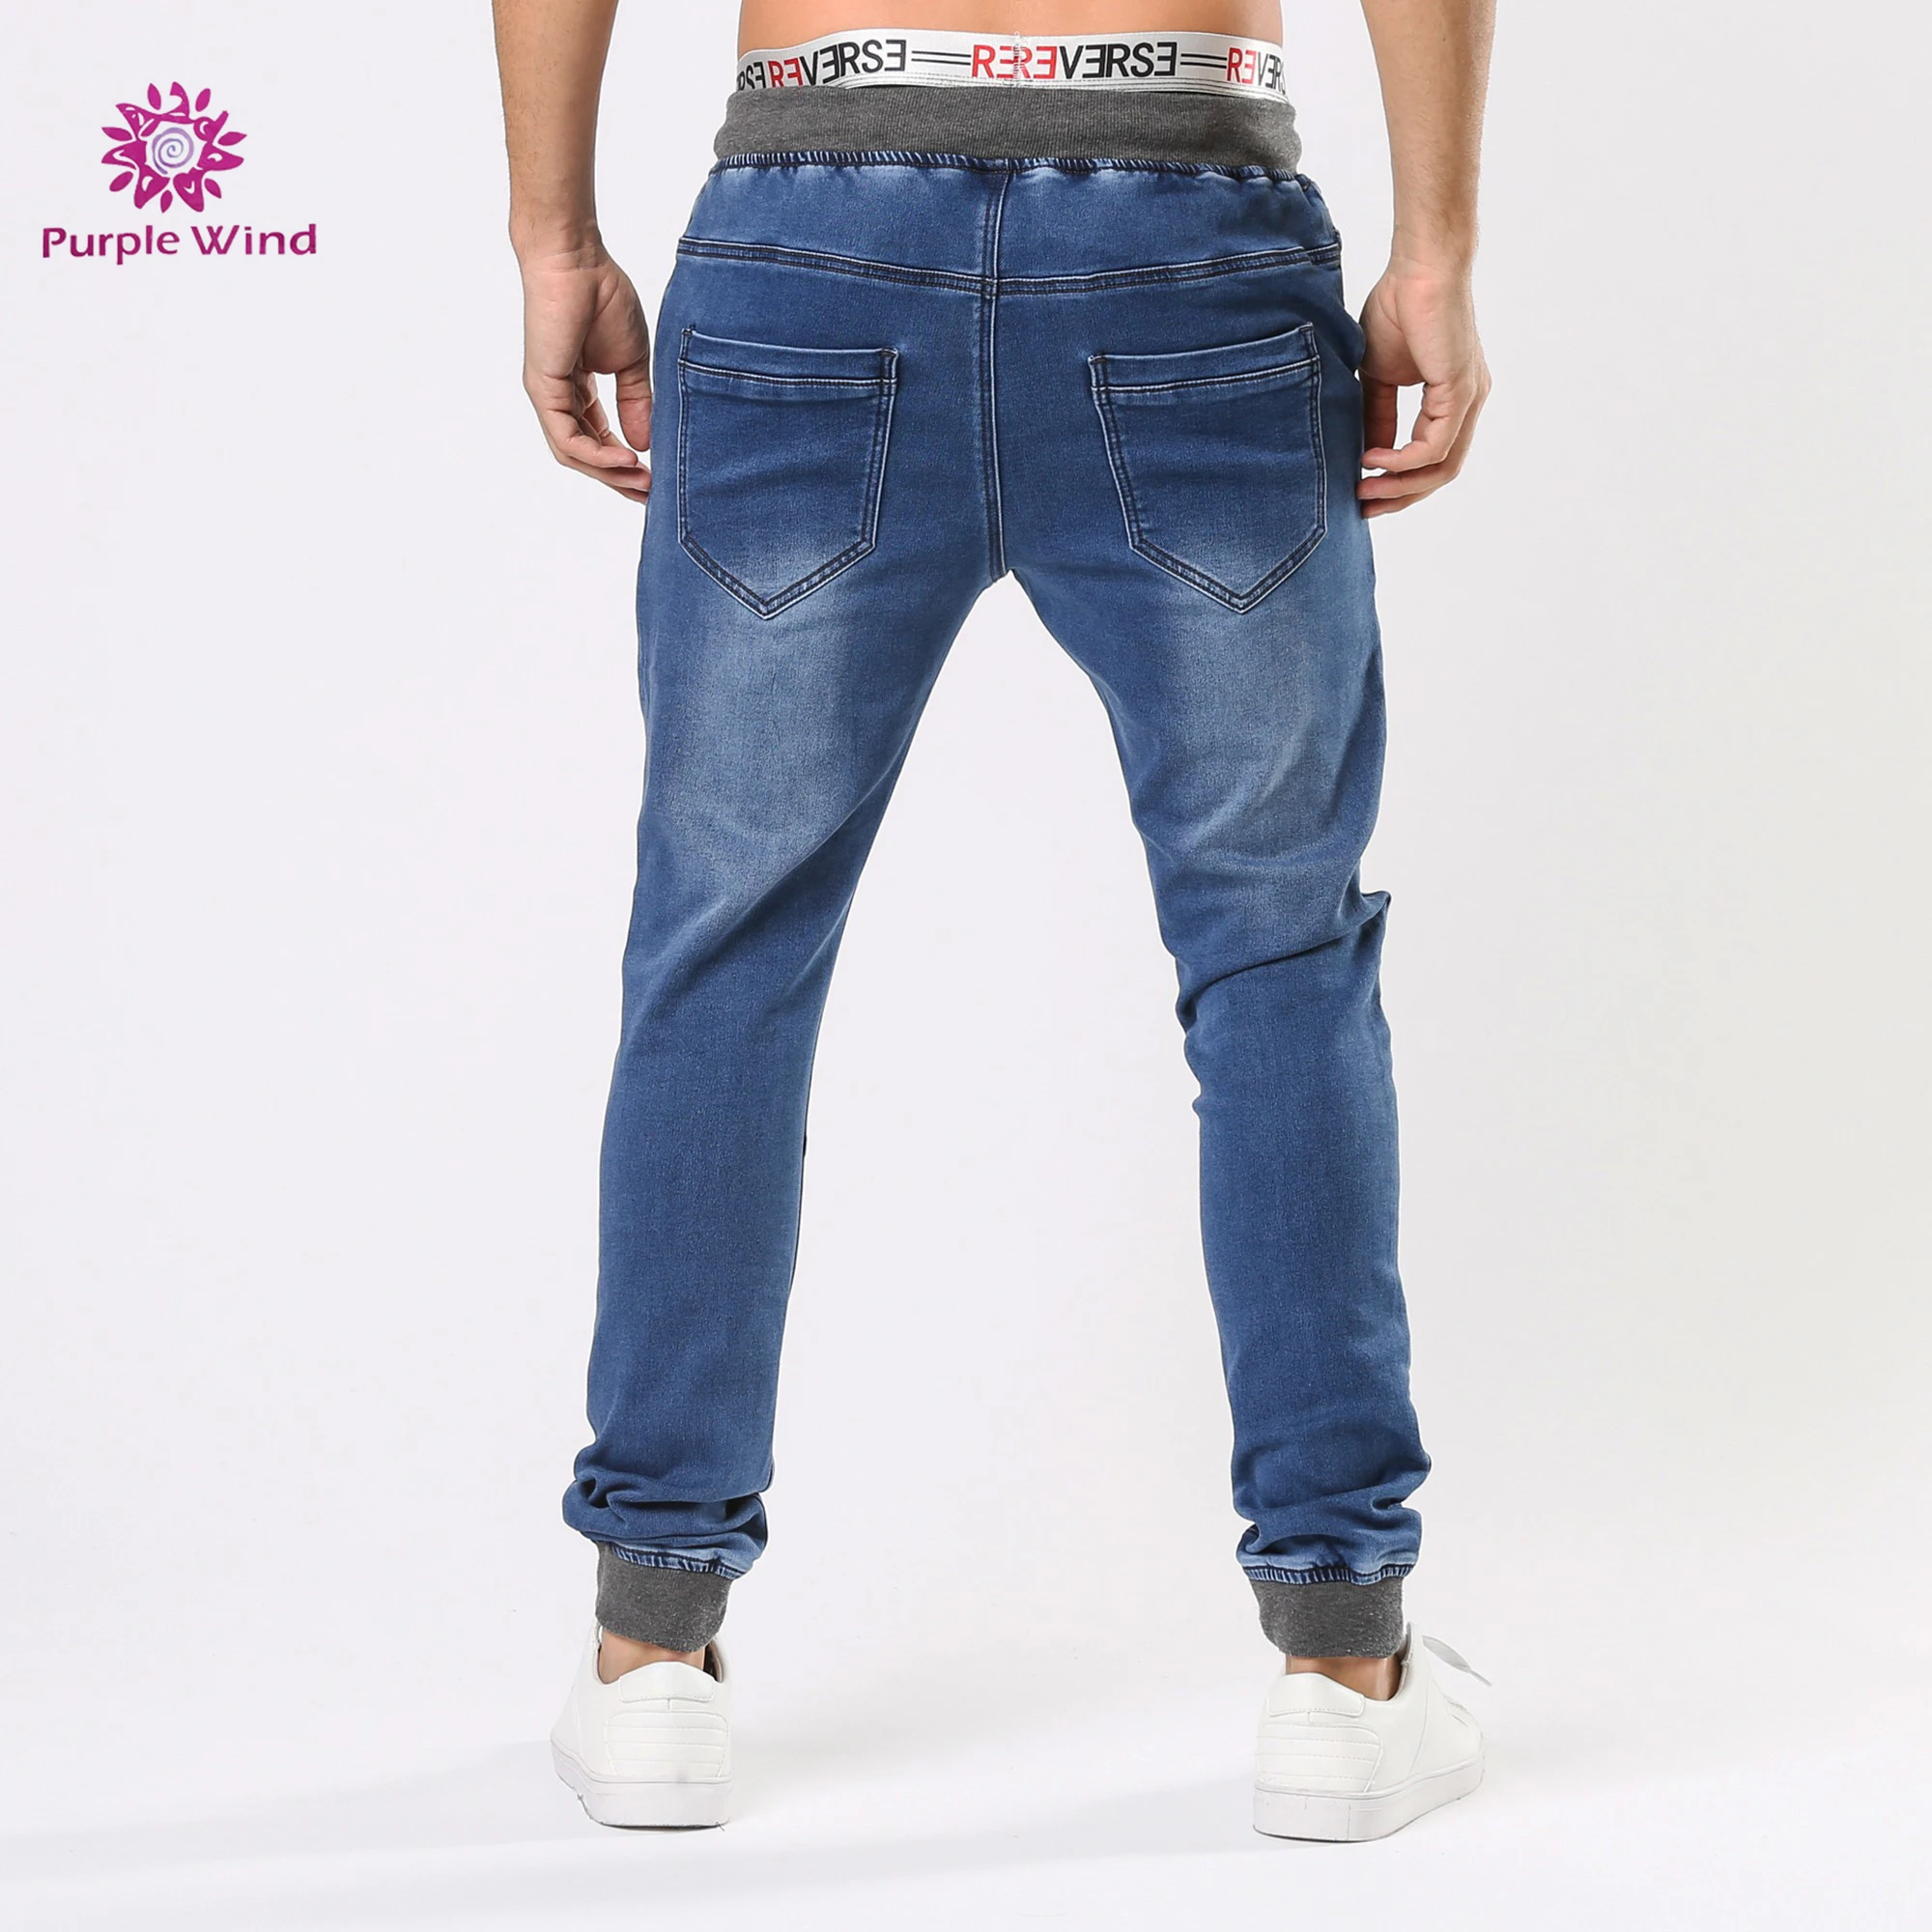 denim jeans with elastic waistband